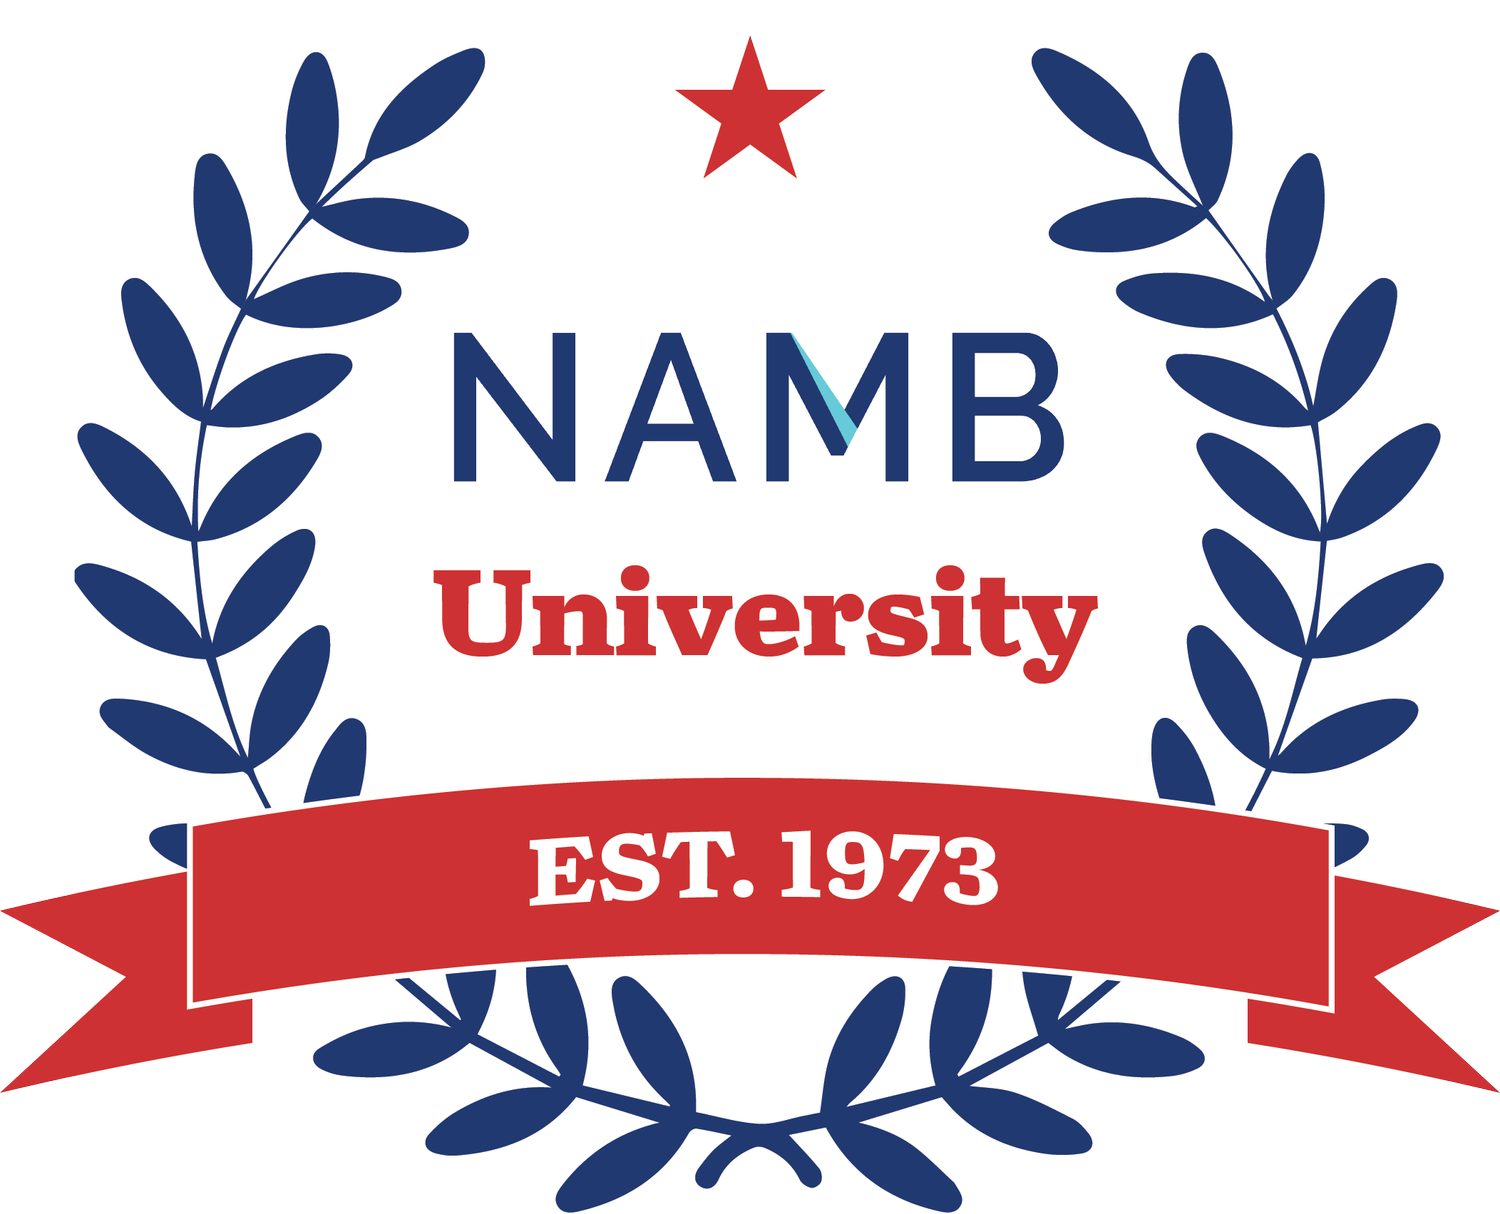 NAMB University 